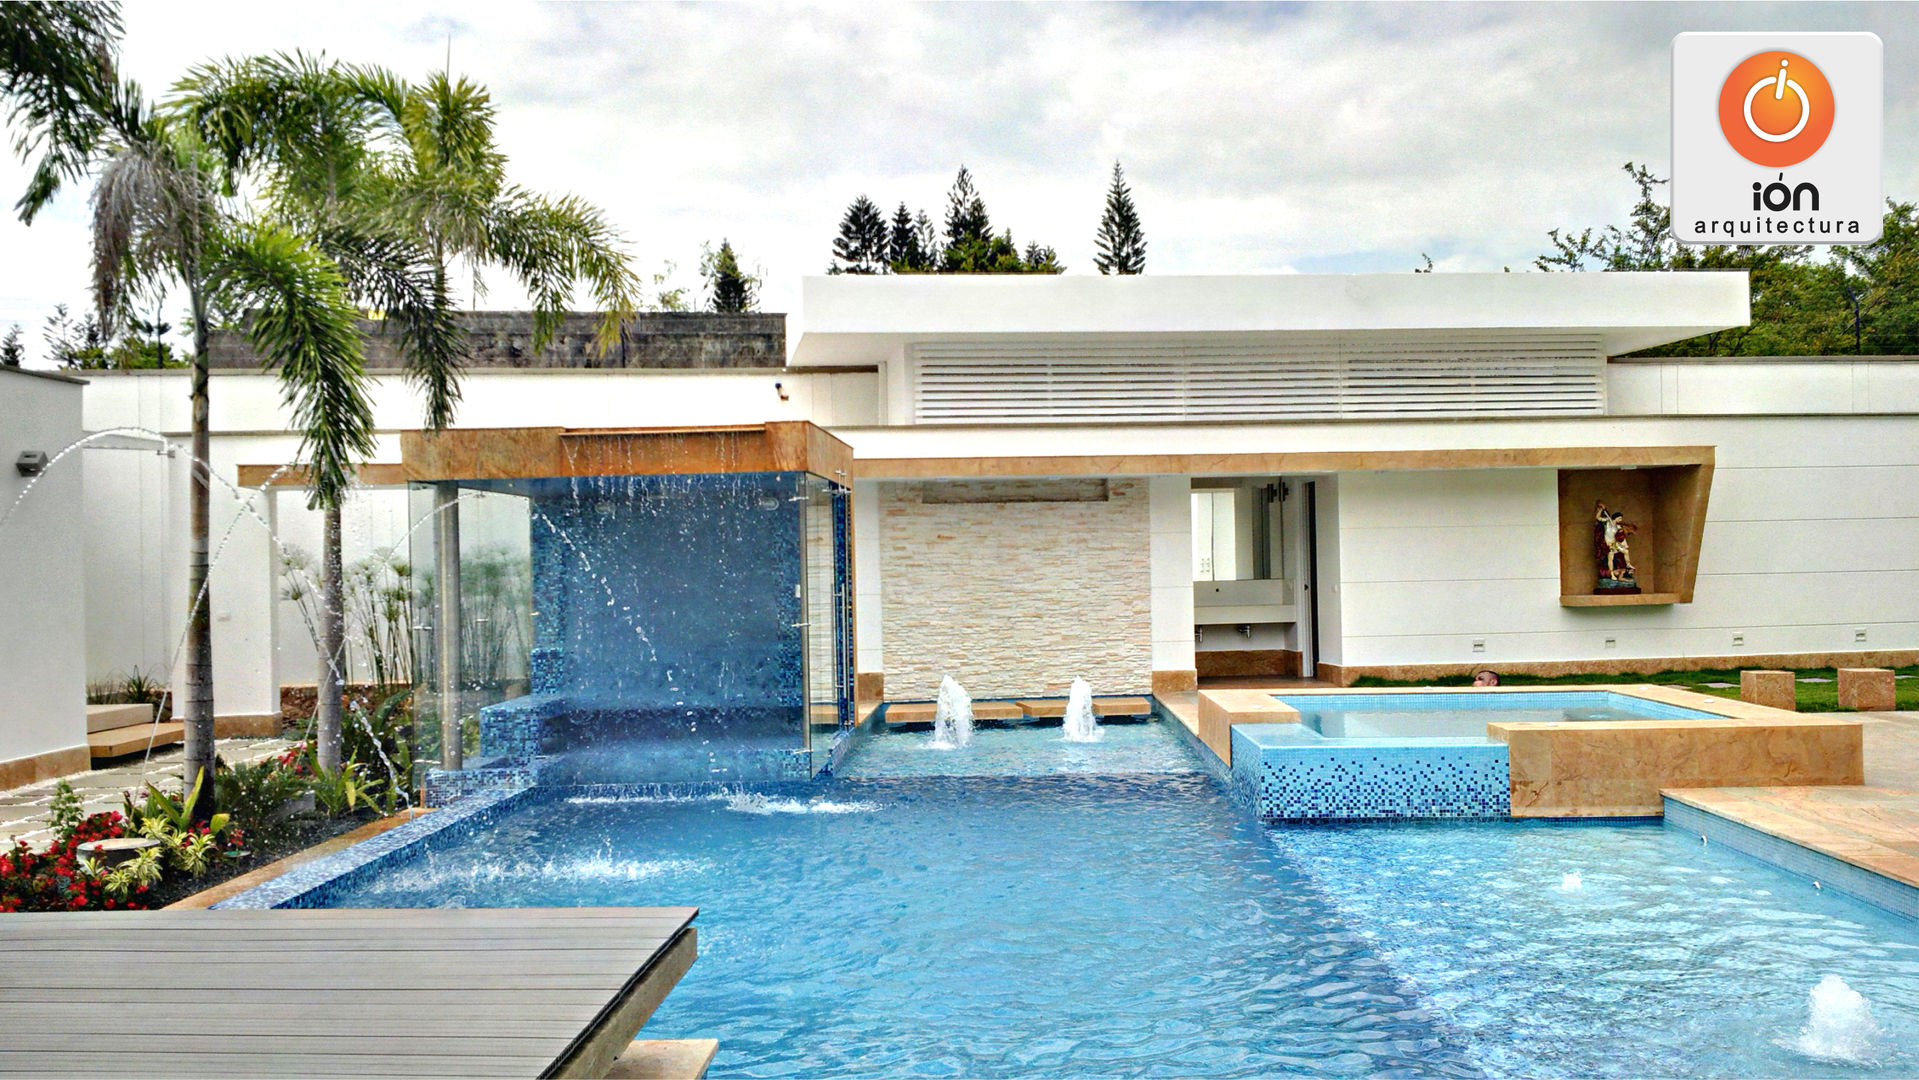 PISCINA CASA BLANCA, Cali - Colombia ION arquitectura SAS Piscinas de estilo minimalista piscina,exteriores,jardines,jacuzzi,turco,cascada